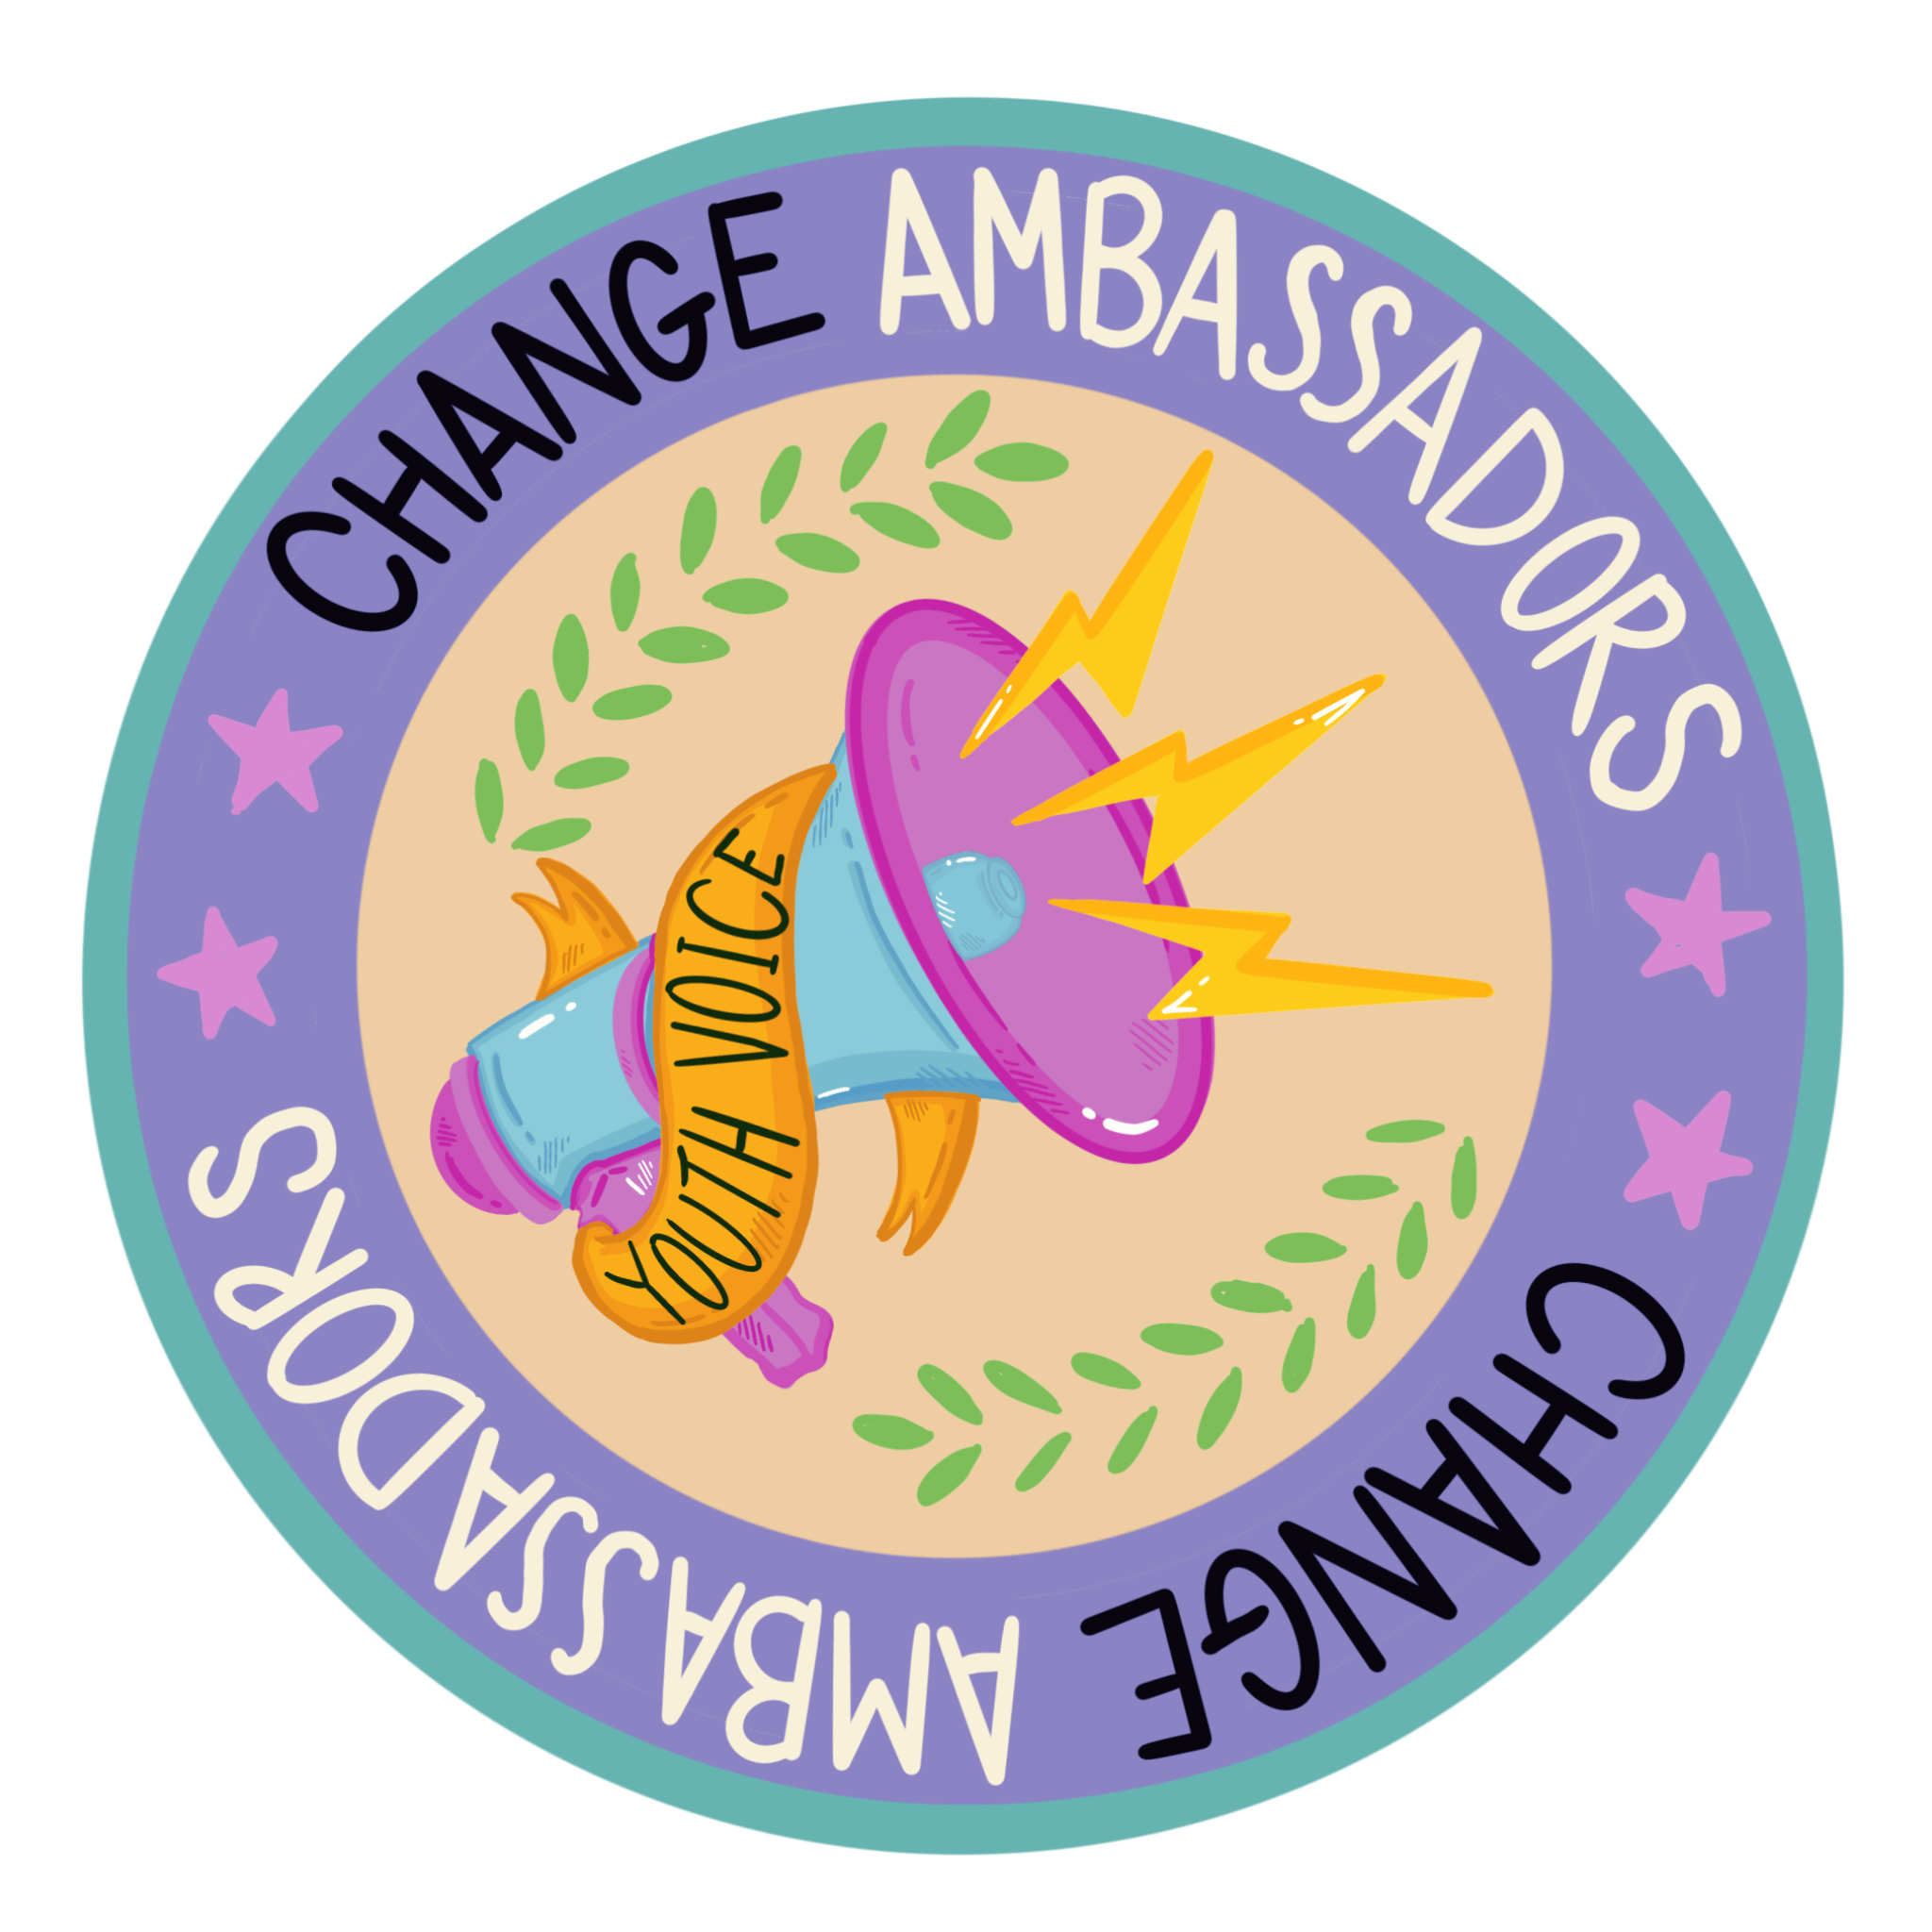 Change Ambassadors news article